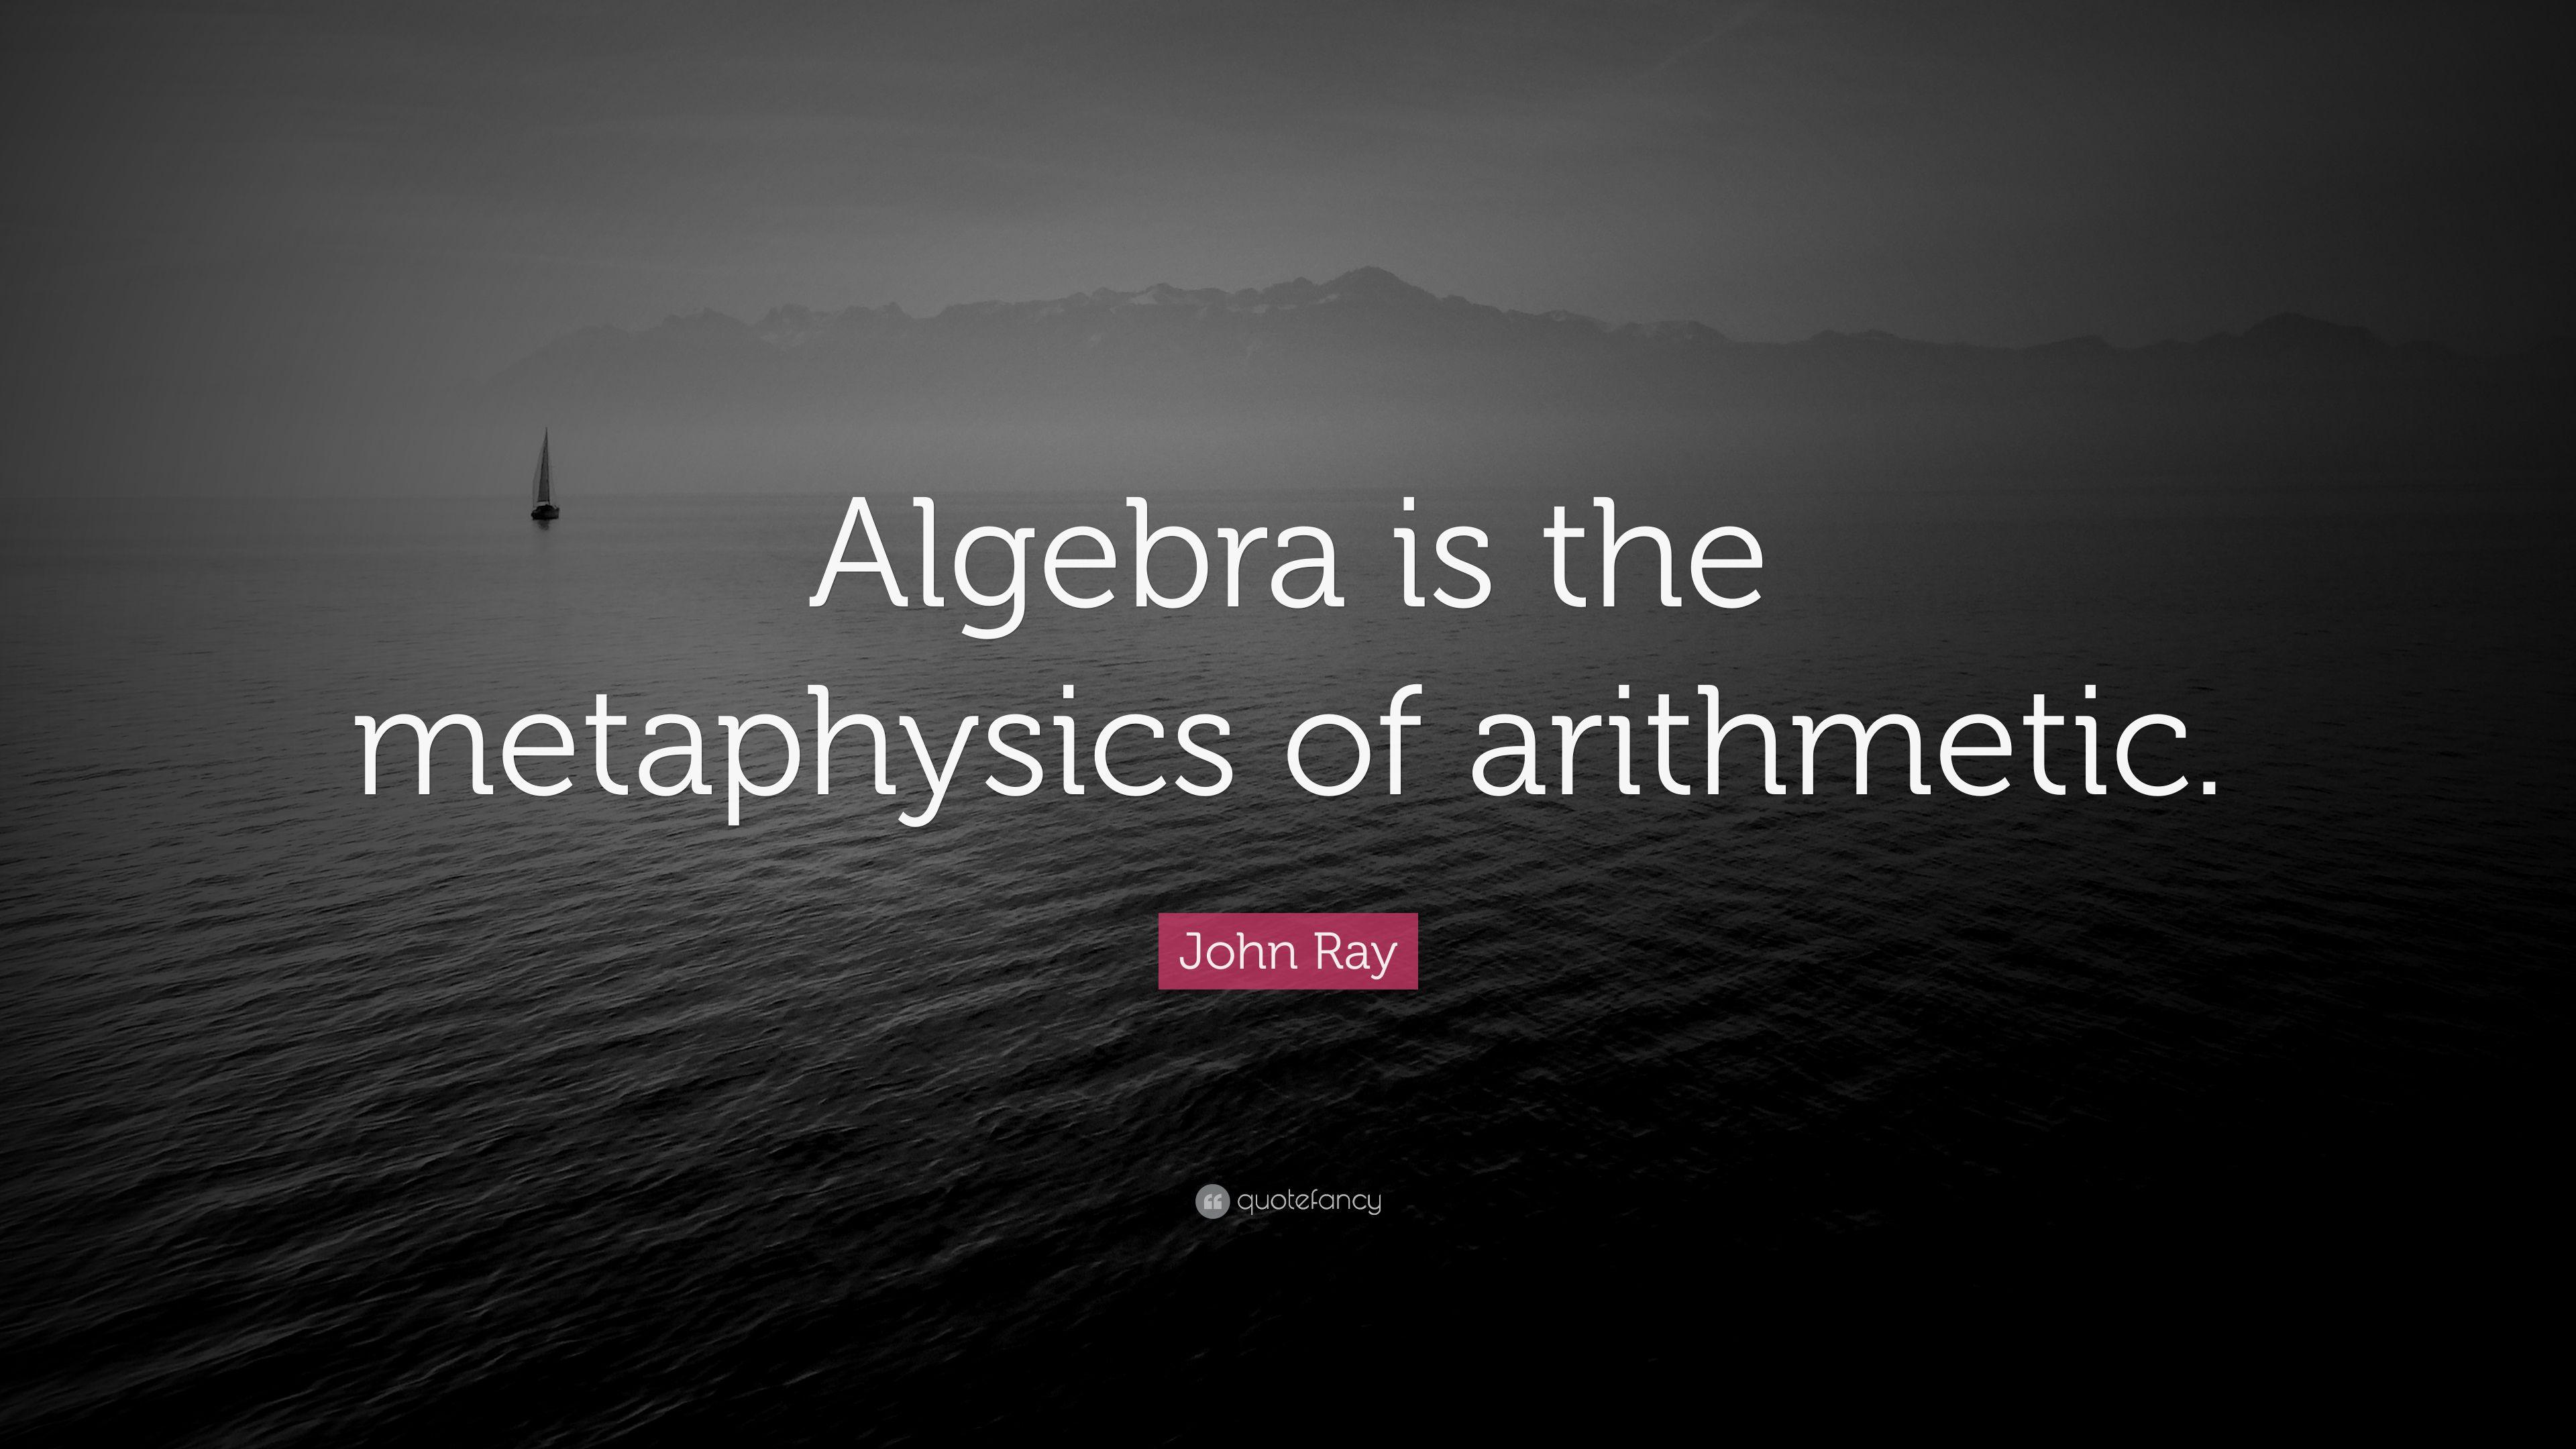 John Ray Quote: “Algebra is the metaphysics of arithmetic.” 7